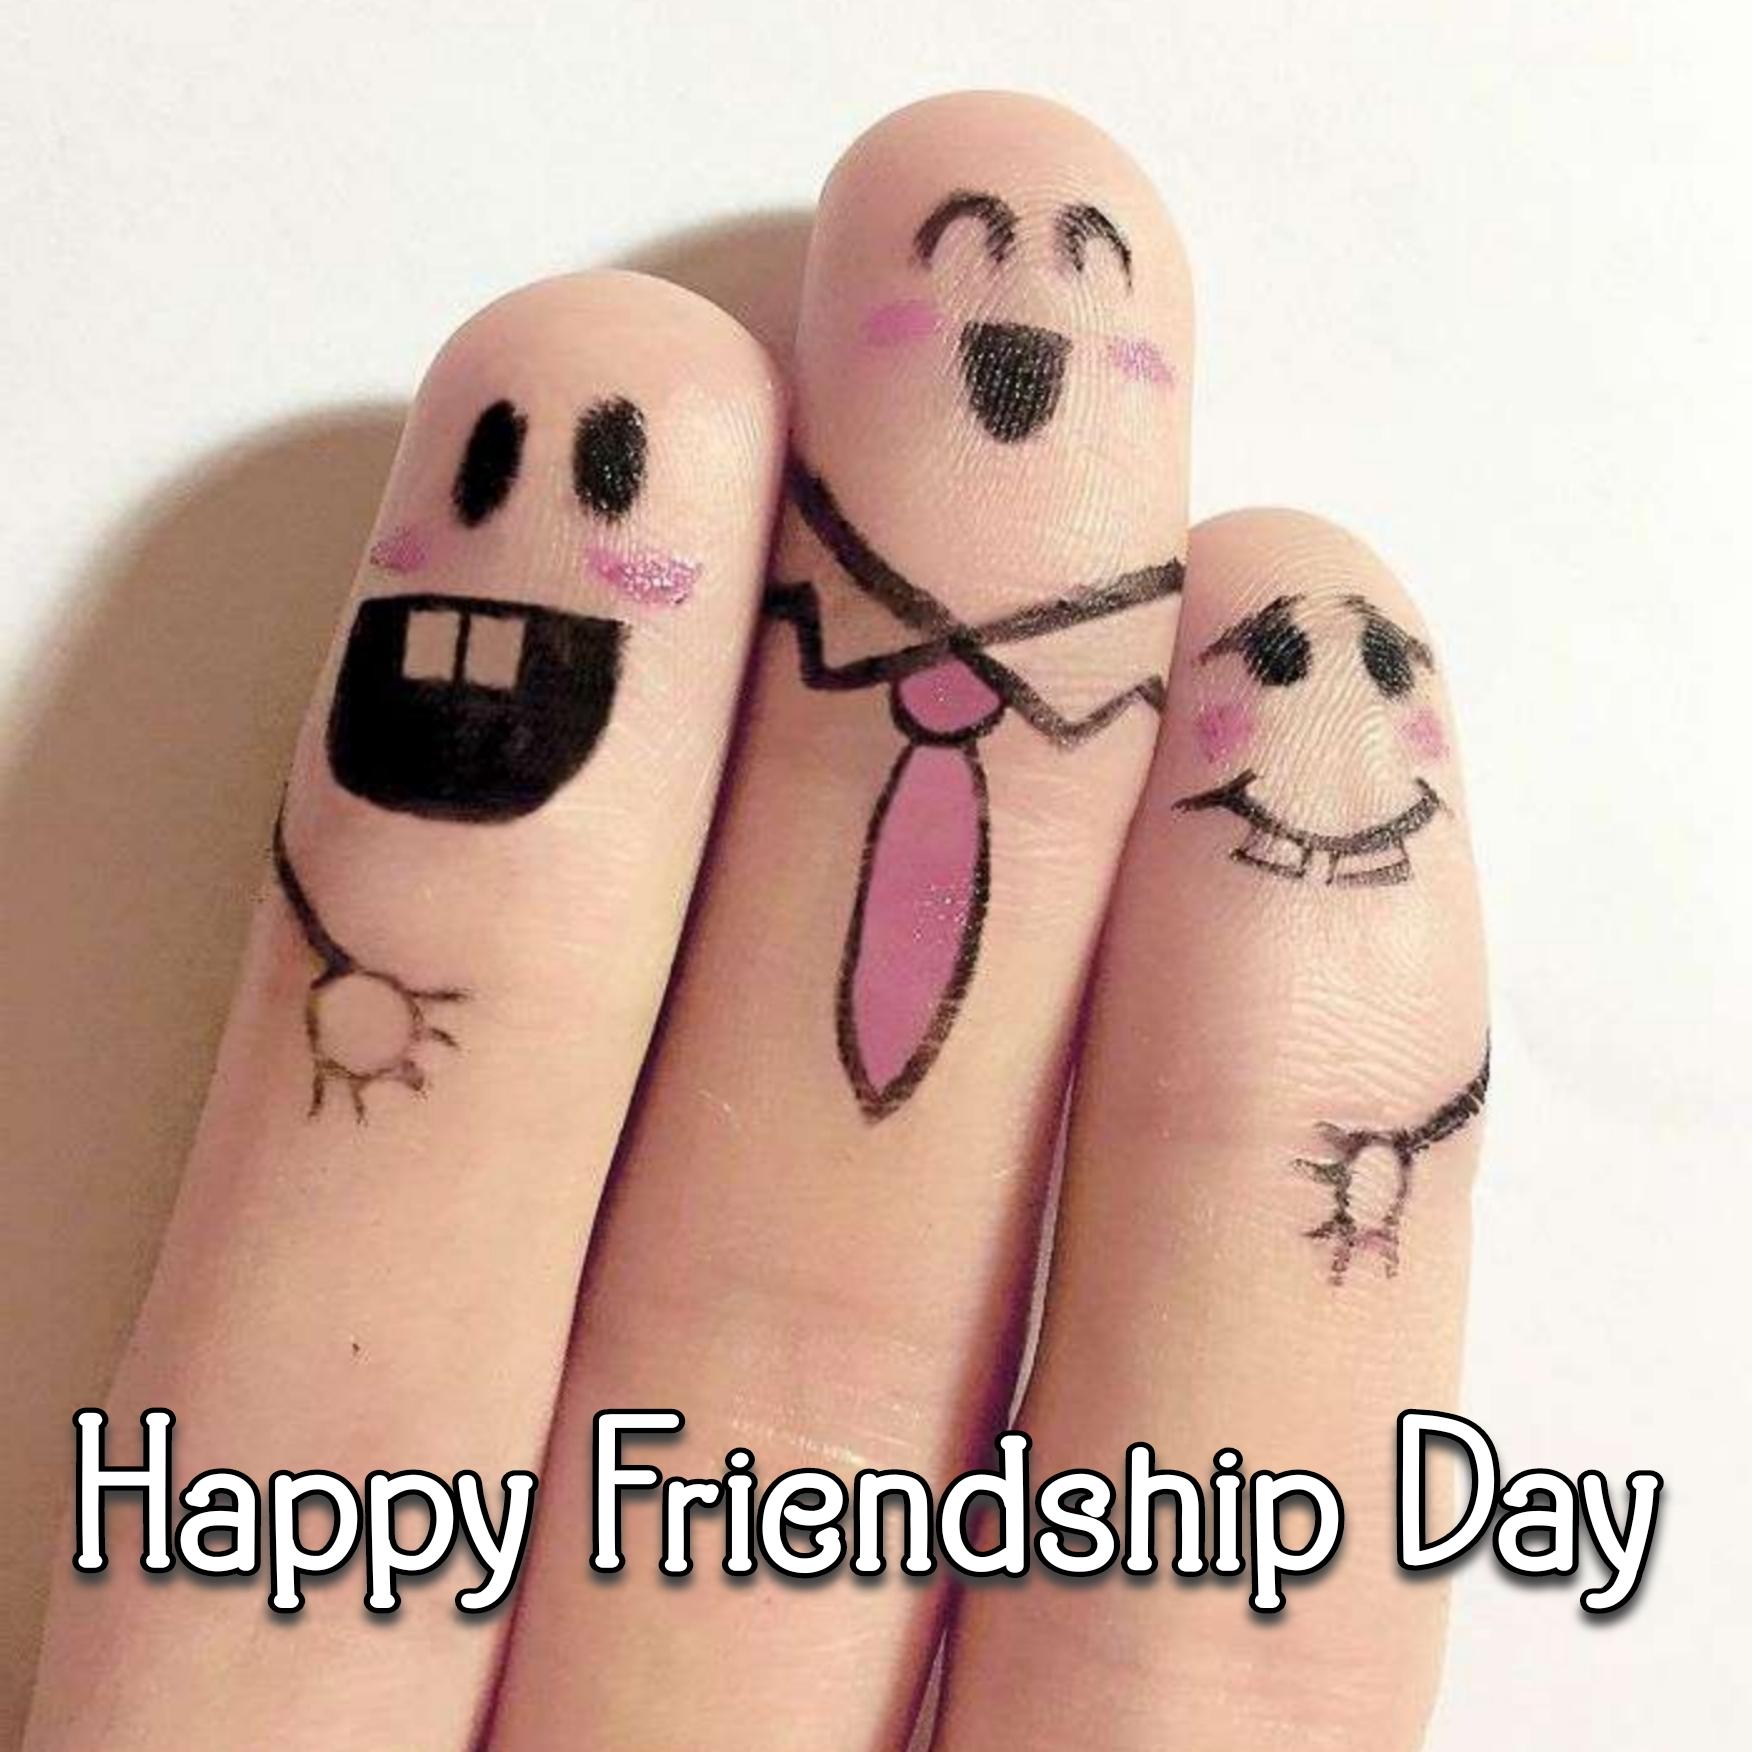 Happy Friendship Day Finger Art Images